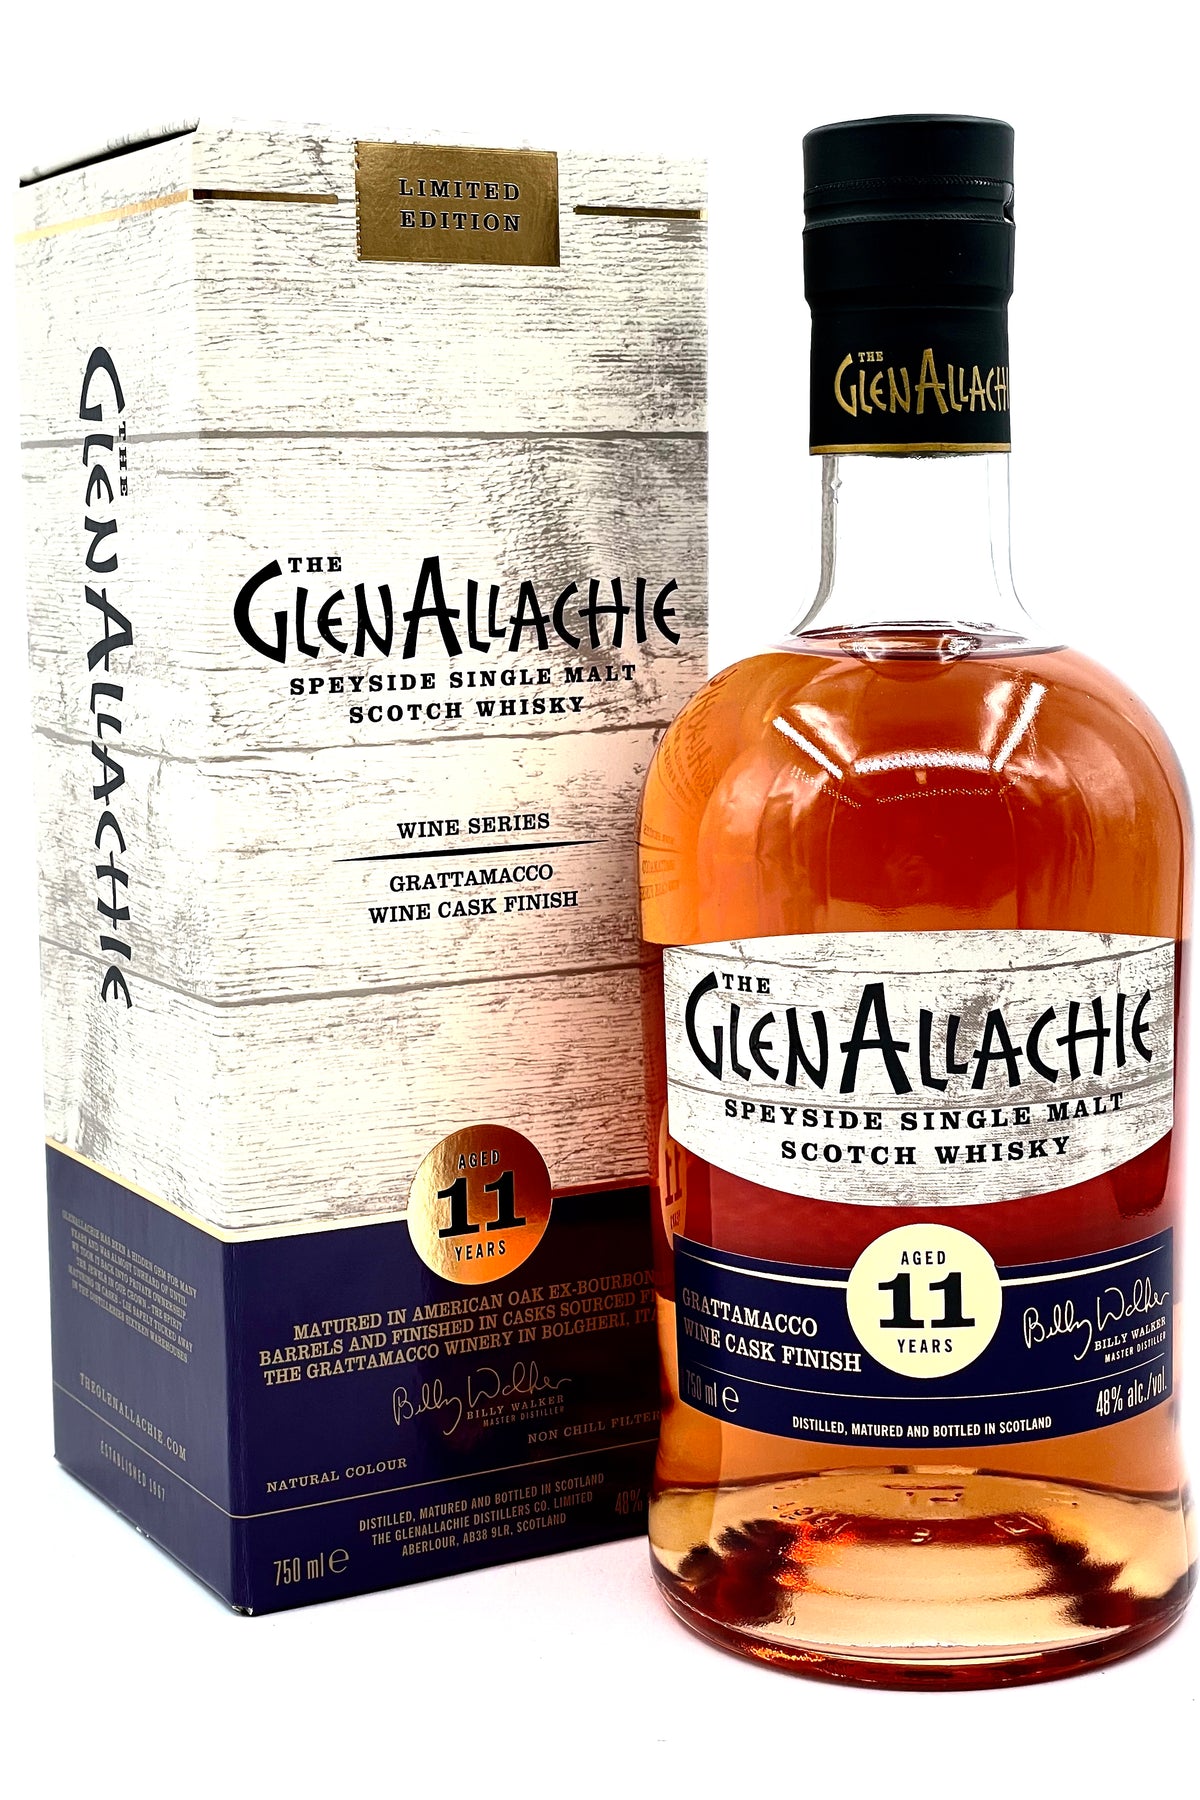 GlenAllachie 11 Year Old Grattamacco Wine Cask Finish Single Malt Scotch Whisky